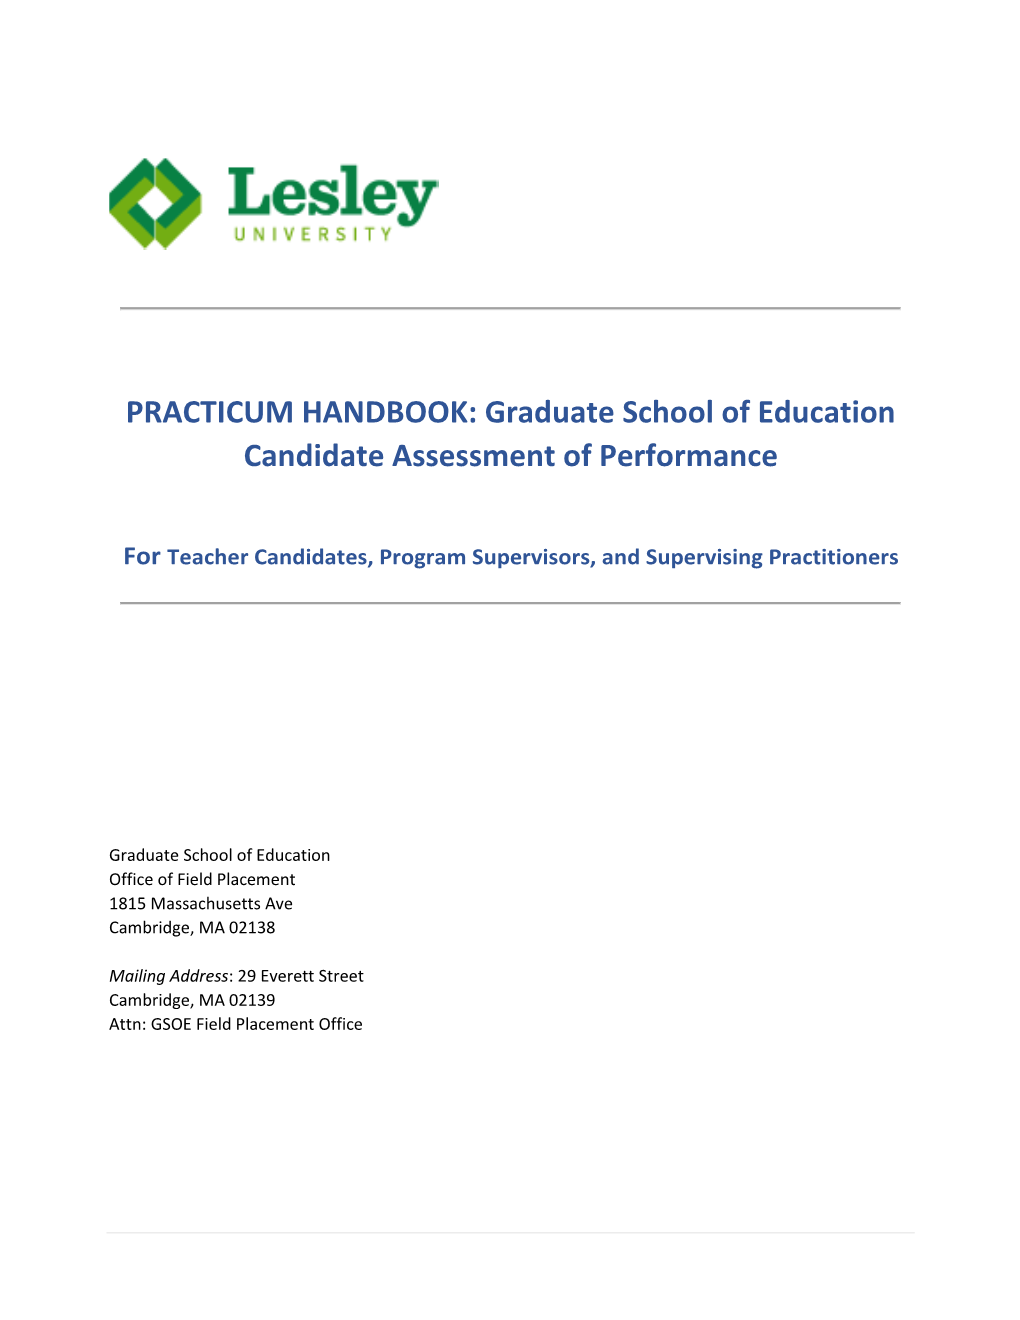 PRACTICUM HANDBOOK: Graduate School of Education Candidate Assessment of Performance